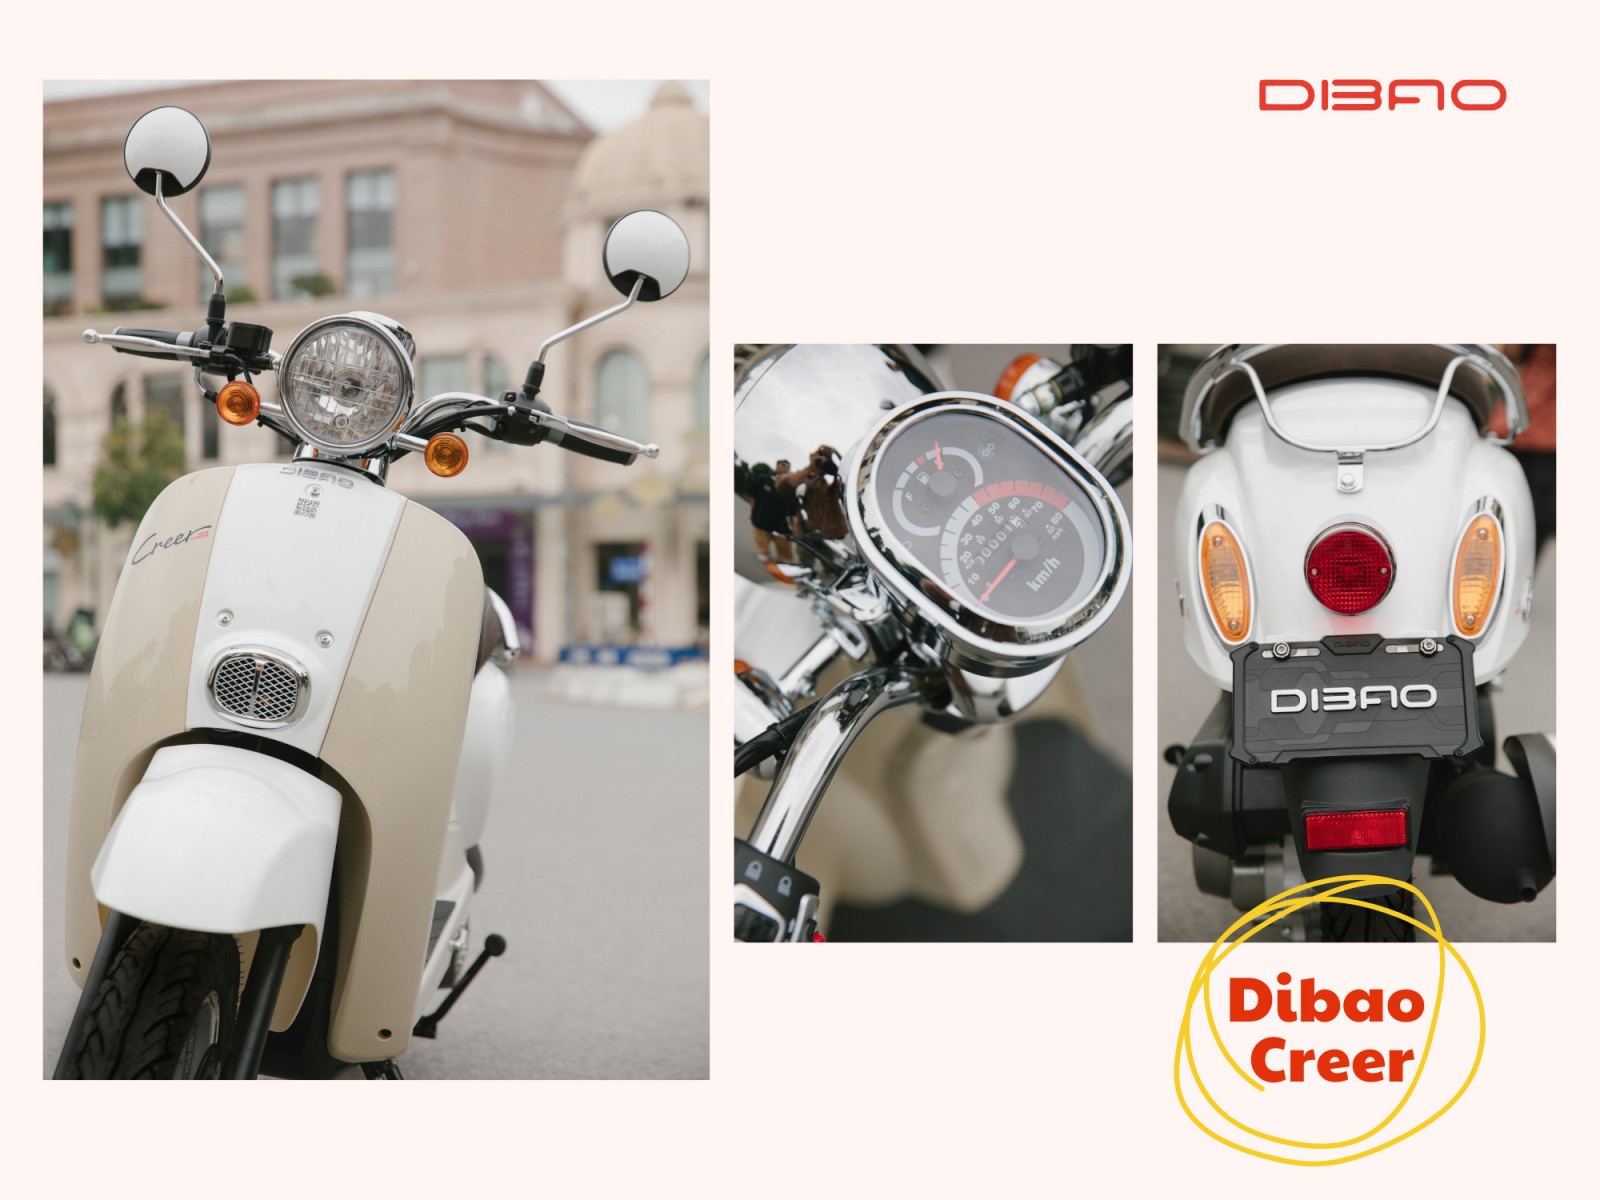 Xe máy ga 50cc Dibao Creer mang phong cách cổ điển